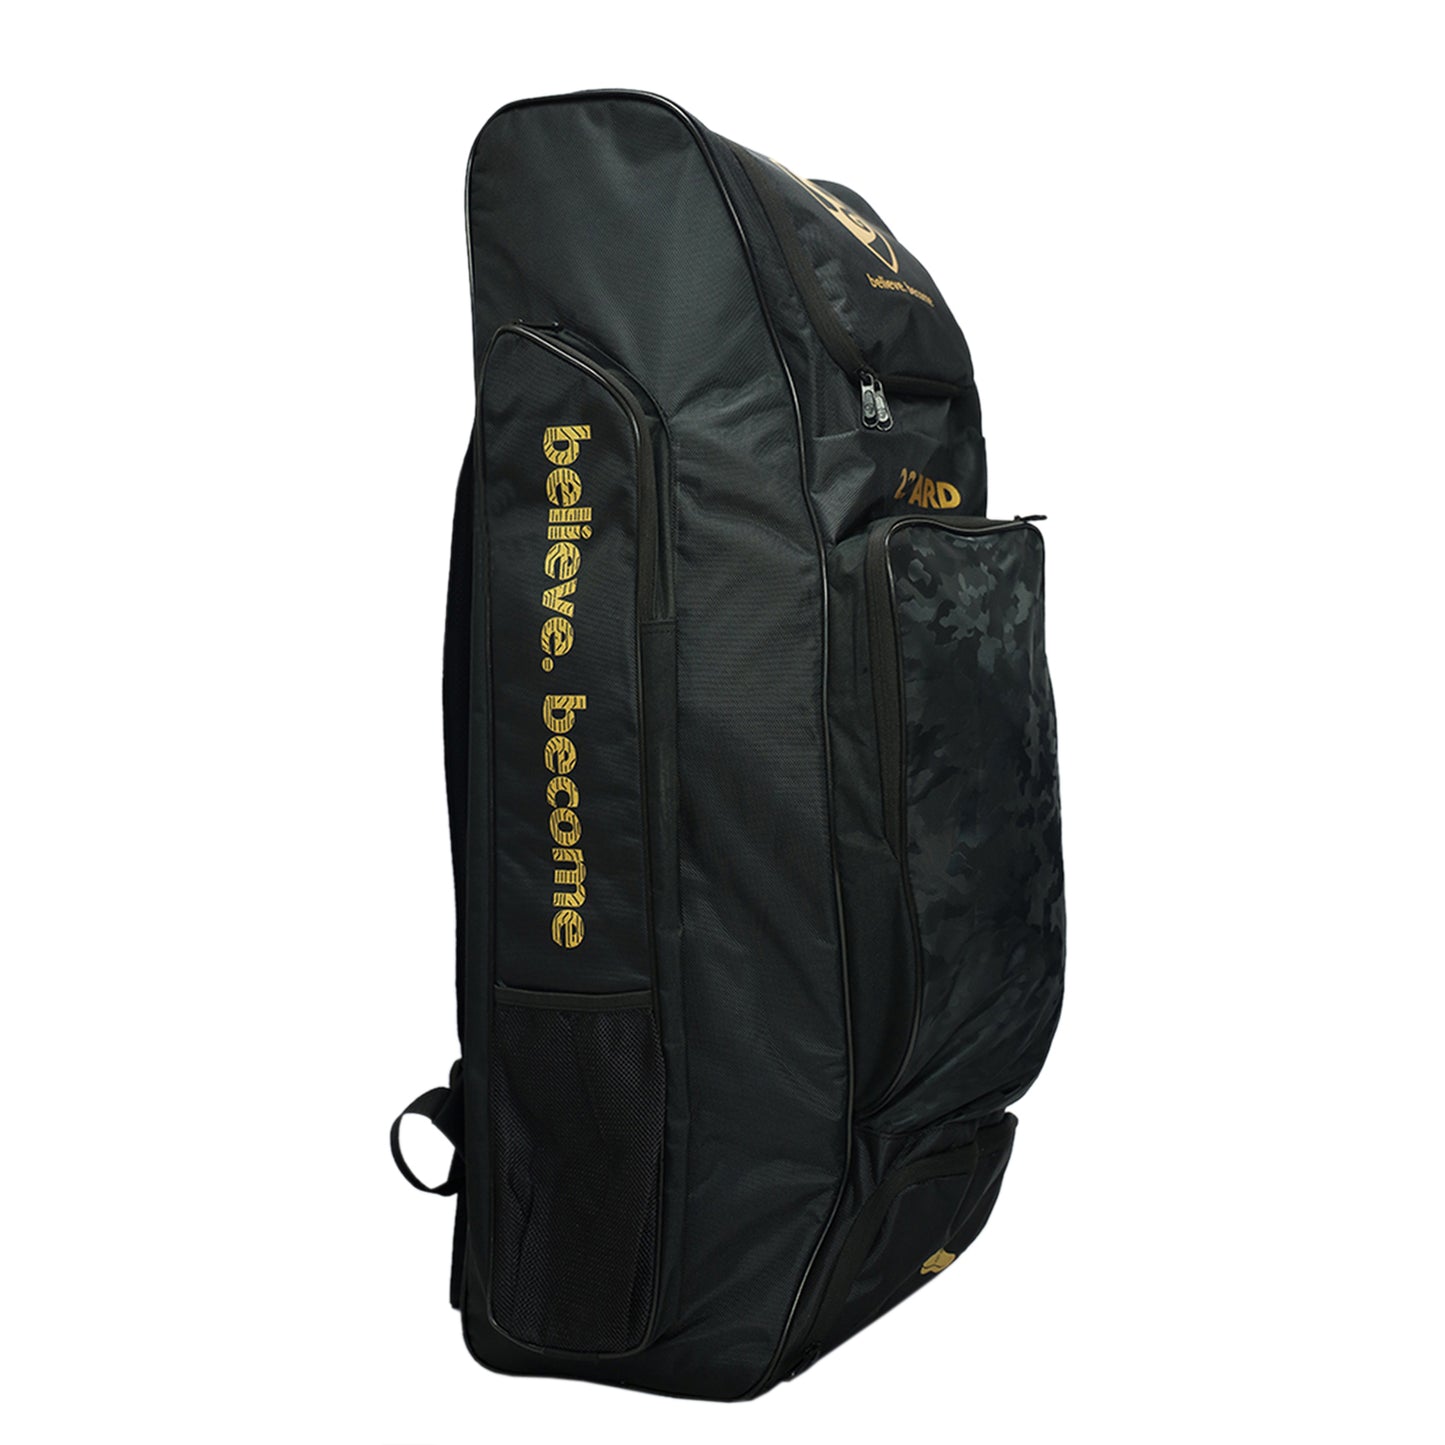 SG 22 Yard Duffle Cricket Kitbag, Large - Best Price online Prokicksports.com